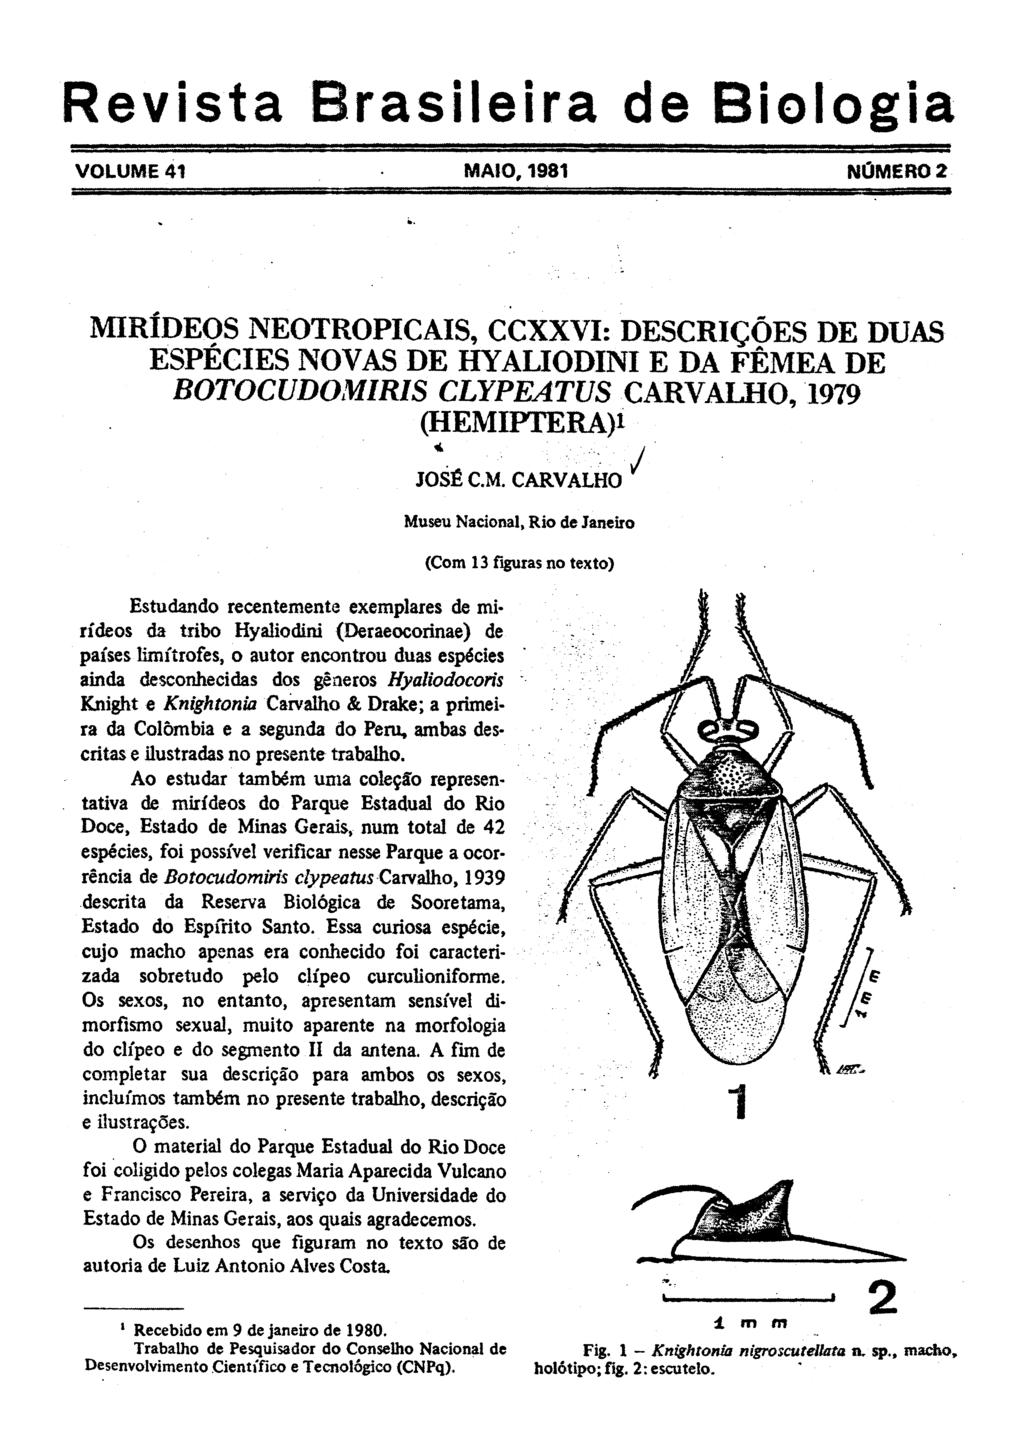 Revista Brasileira de Biologia VOLUME 41 MAIO, 1981 NOMERO 2 MIRIDEOS NEOTROPICAIS, CCXXVI: DESCRICOES DE DUAS ESPECIES NOVAS DE HYALIODINI E DA FEMEA DE BOTOCUDOMIRIS CLYPEATUS CARVALHO,1979